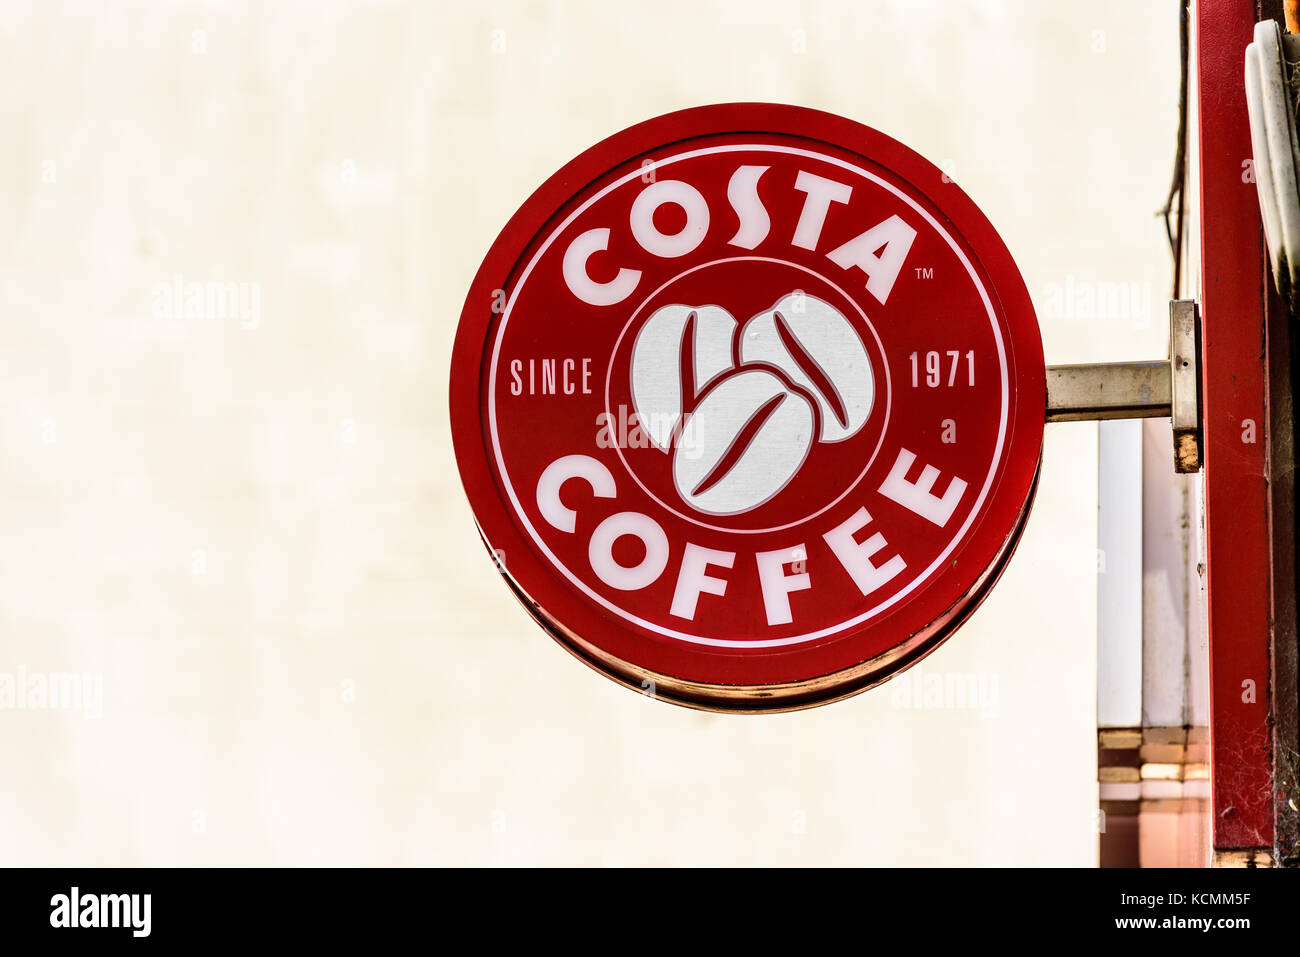 Northampton UK October 5, 2017: Costa Coffee logo sign in Northampton town centre. Stock Photo